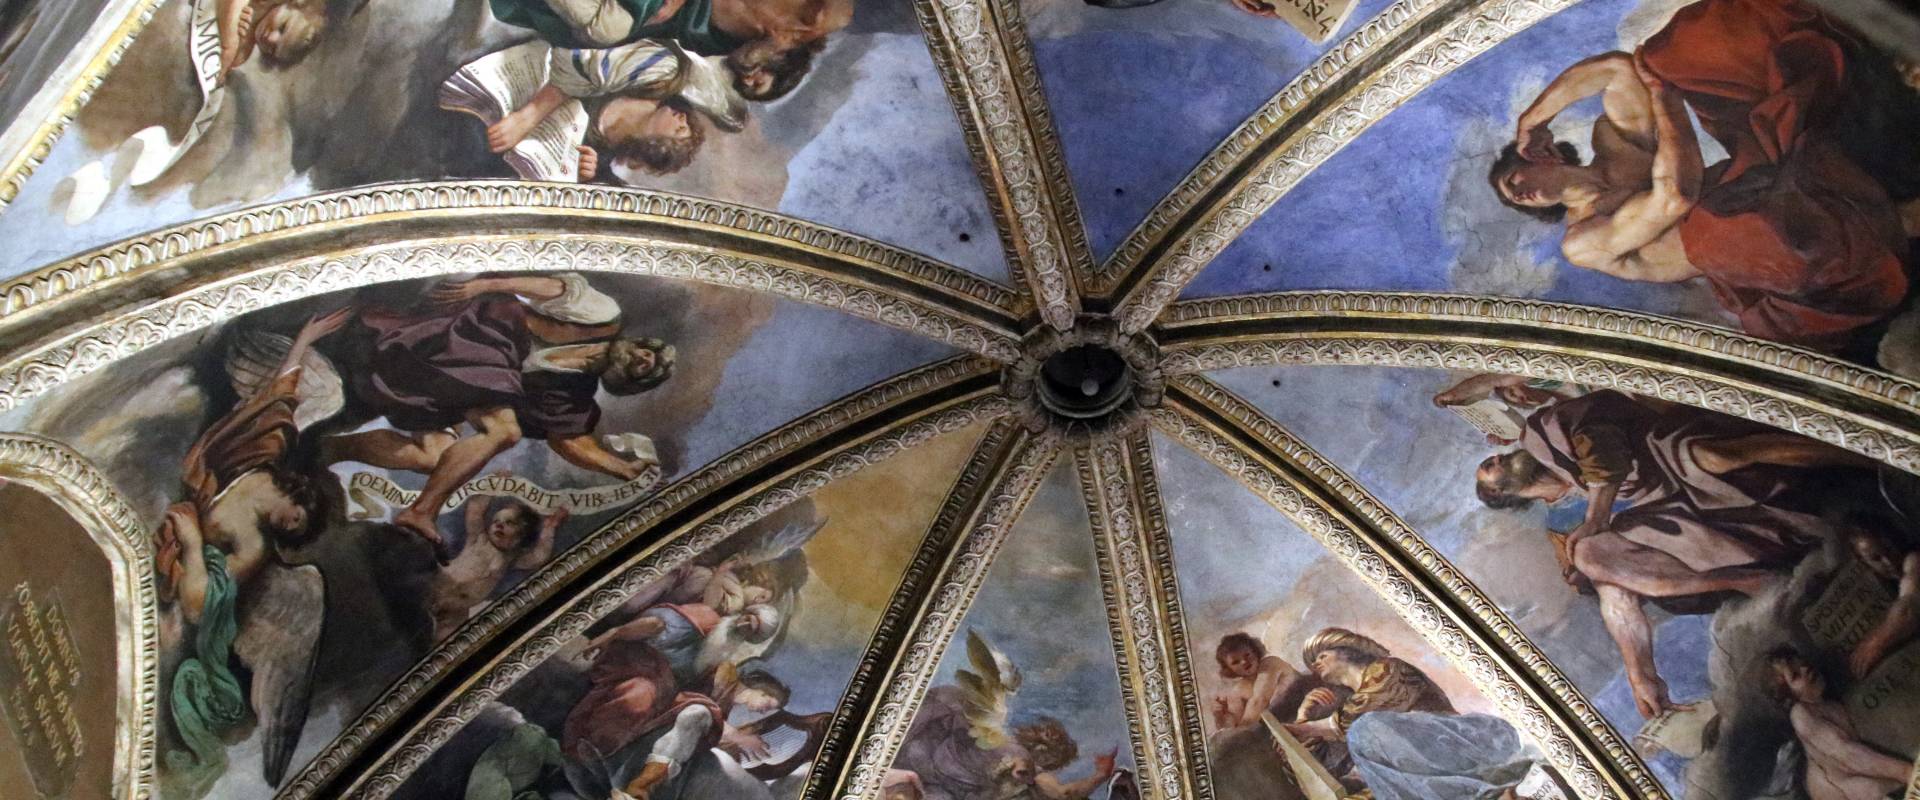 Duomo di Piacenza, cupola affrescata dal Guercino 22 foto di Mongolo1984